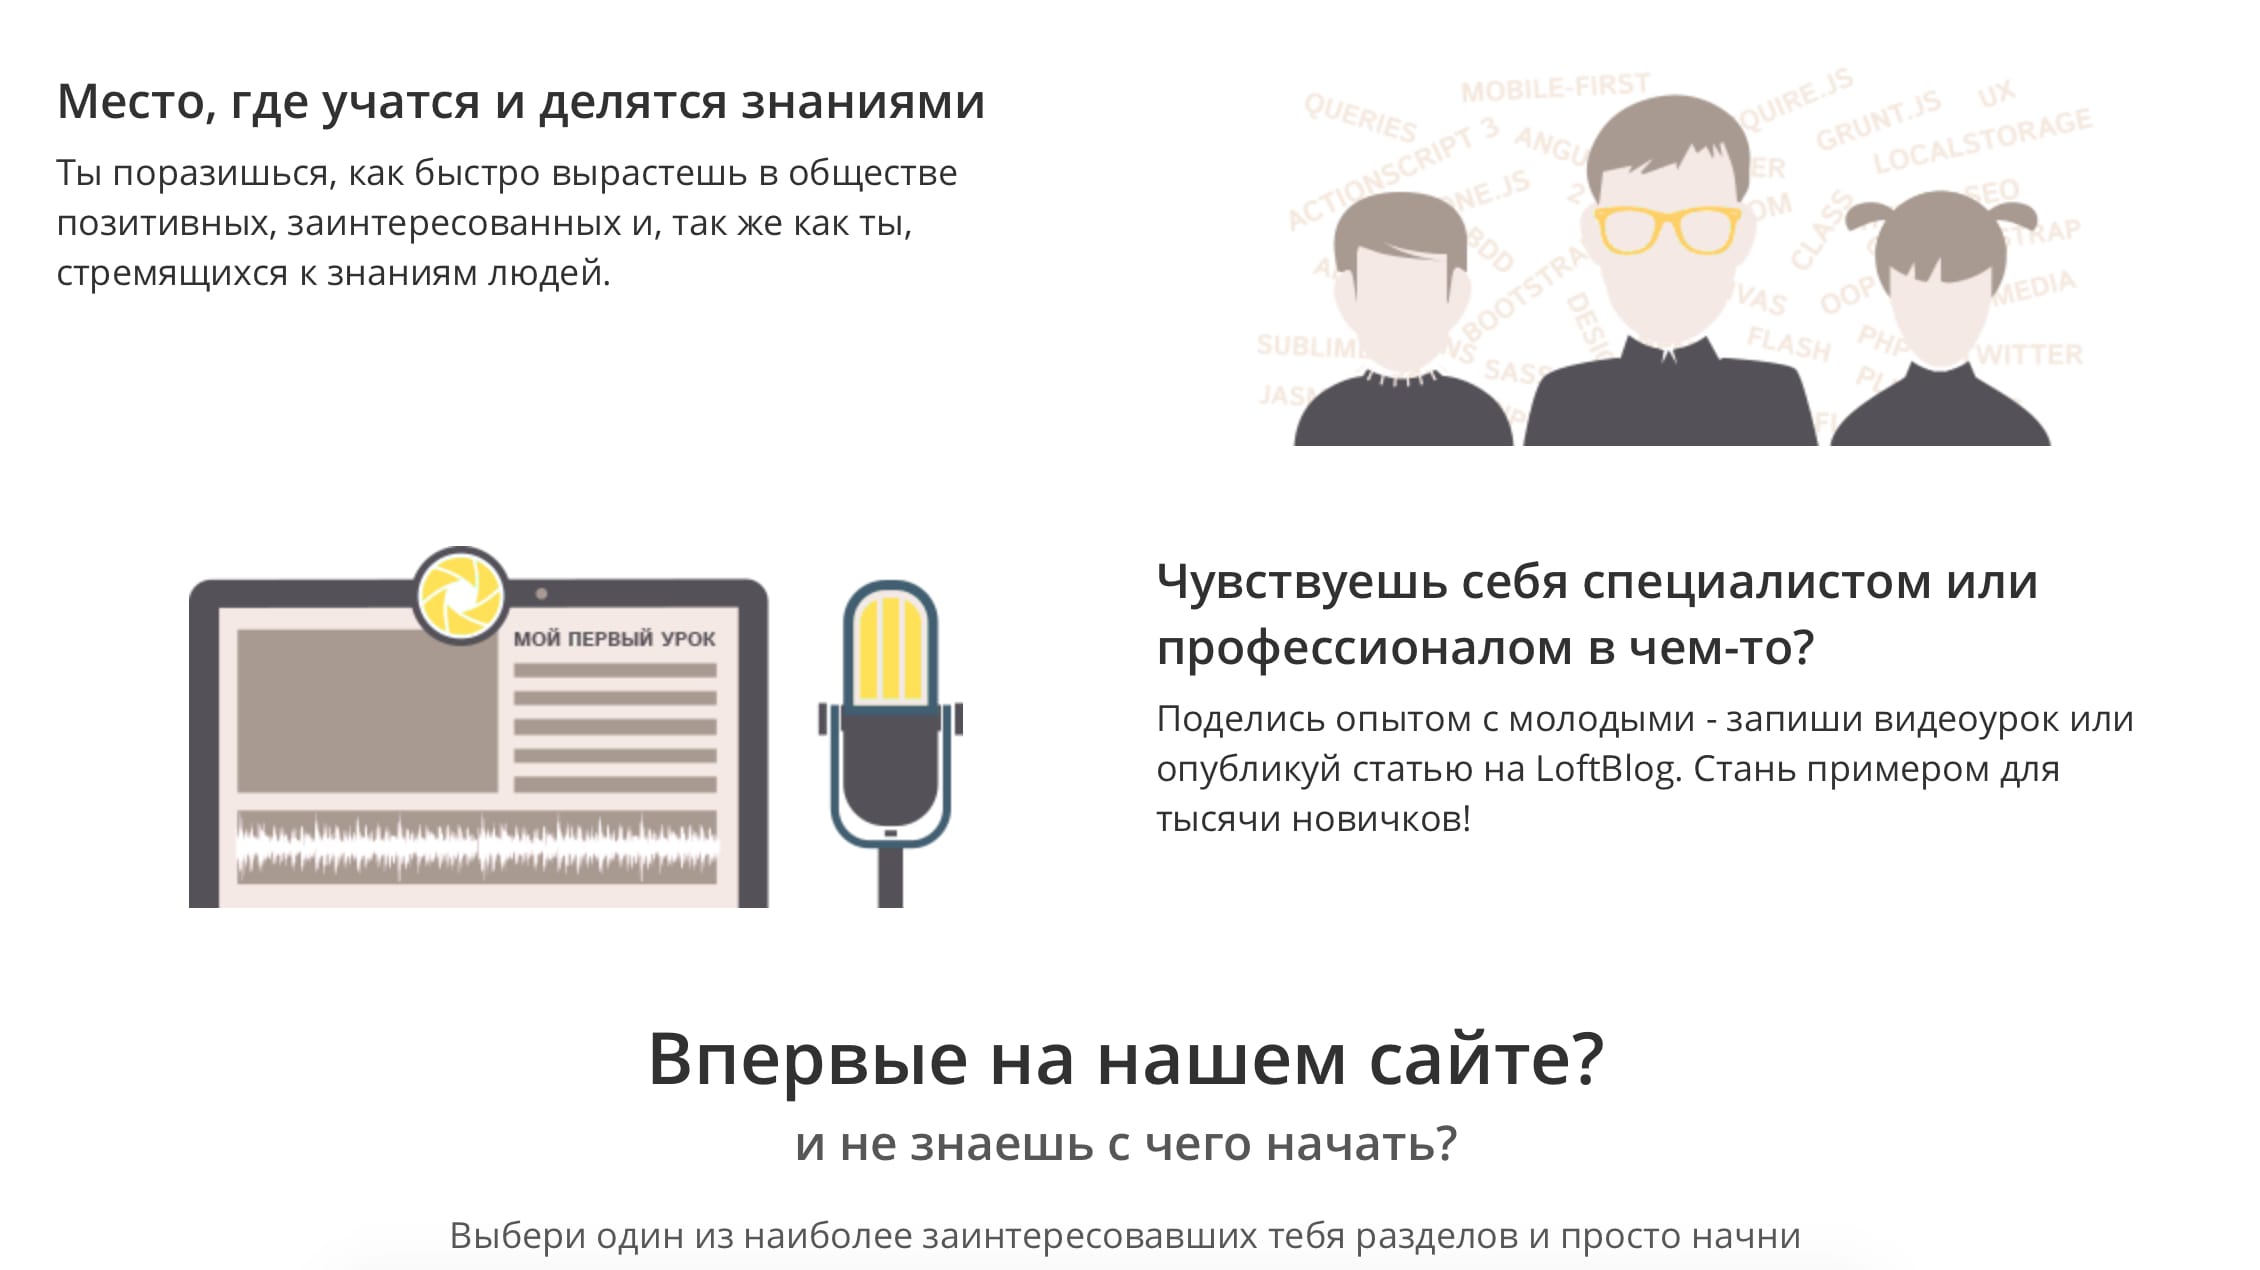 LoftBlog.ru, скриншот интерфейса 2